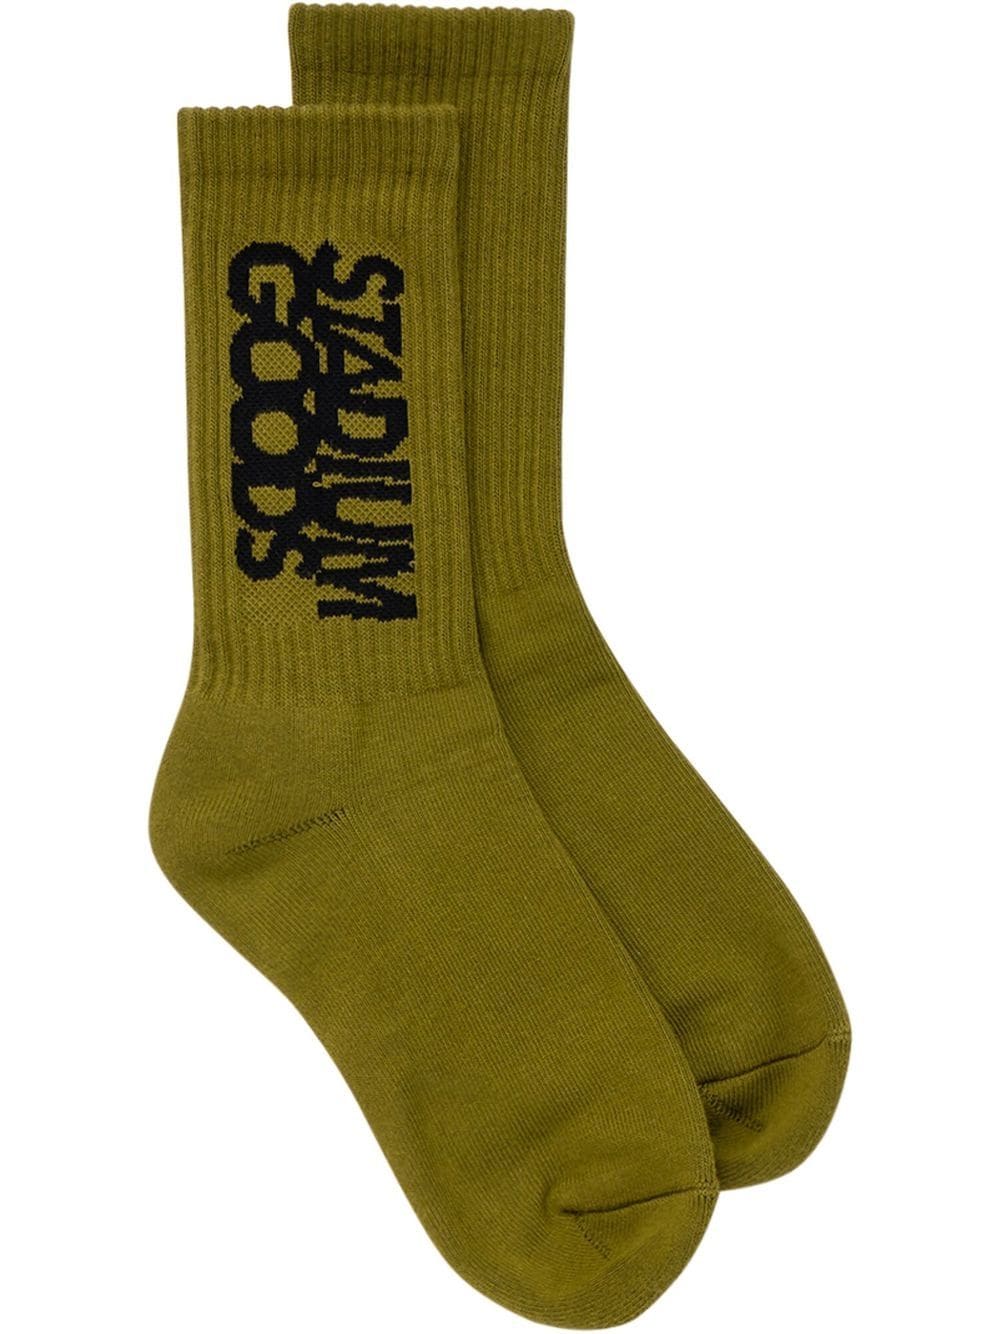 STADIUM GOODS® logo "Army Green" crew socks von STADIUM GOODS®